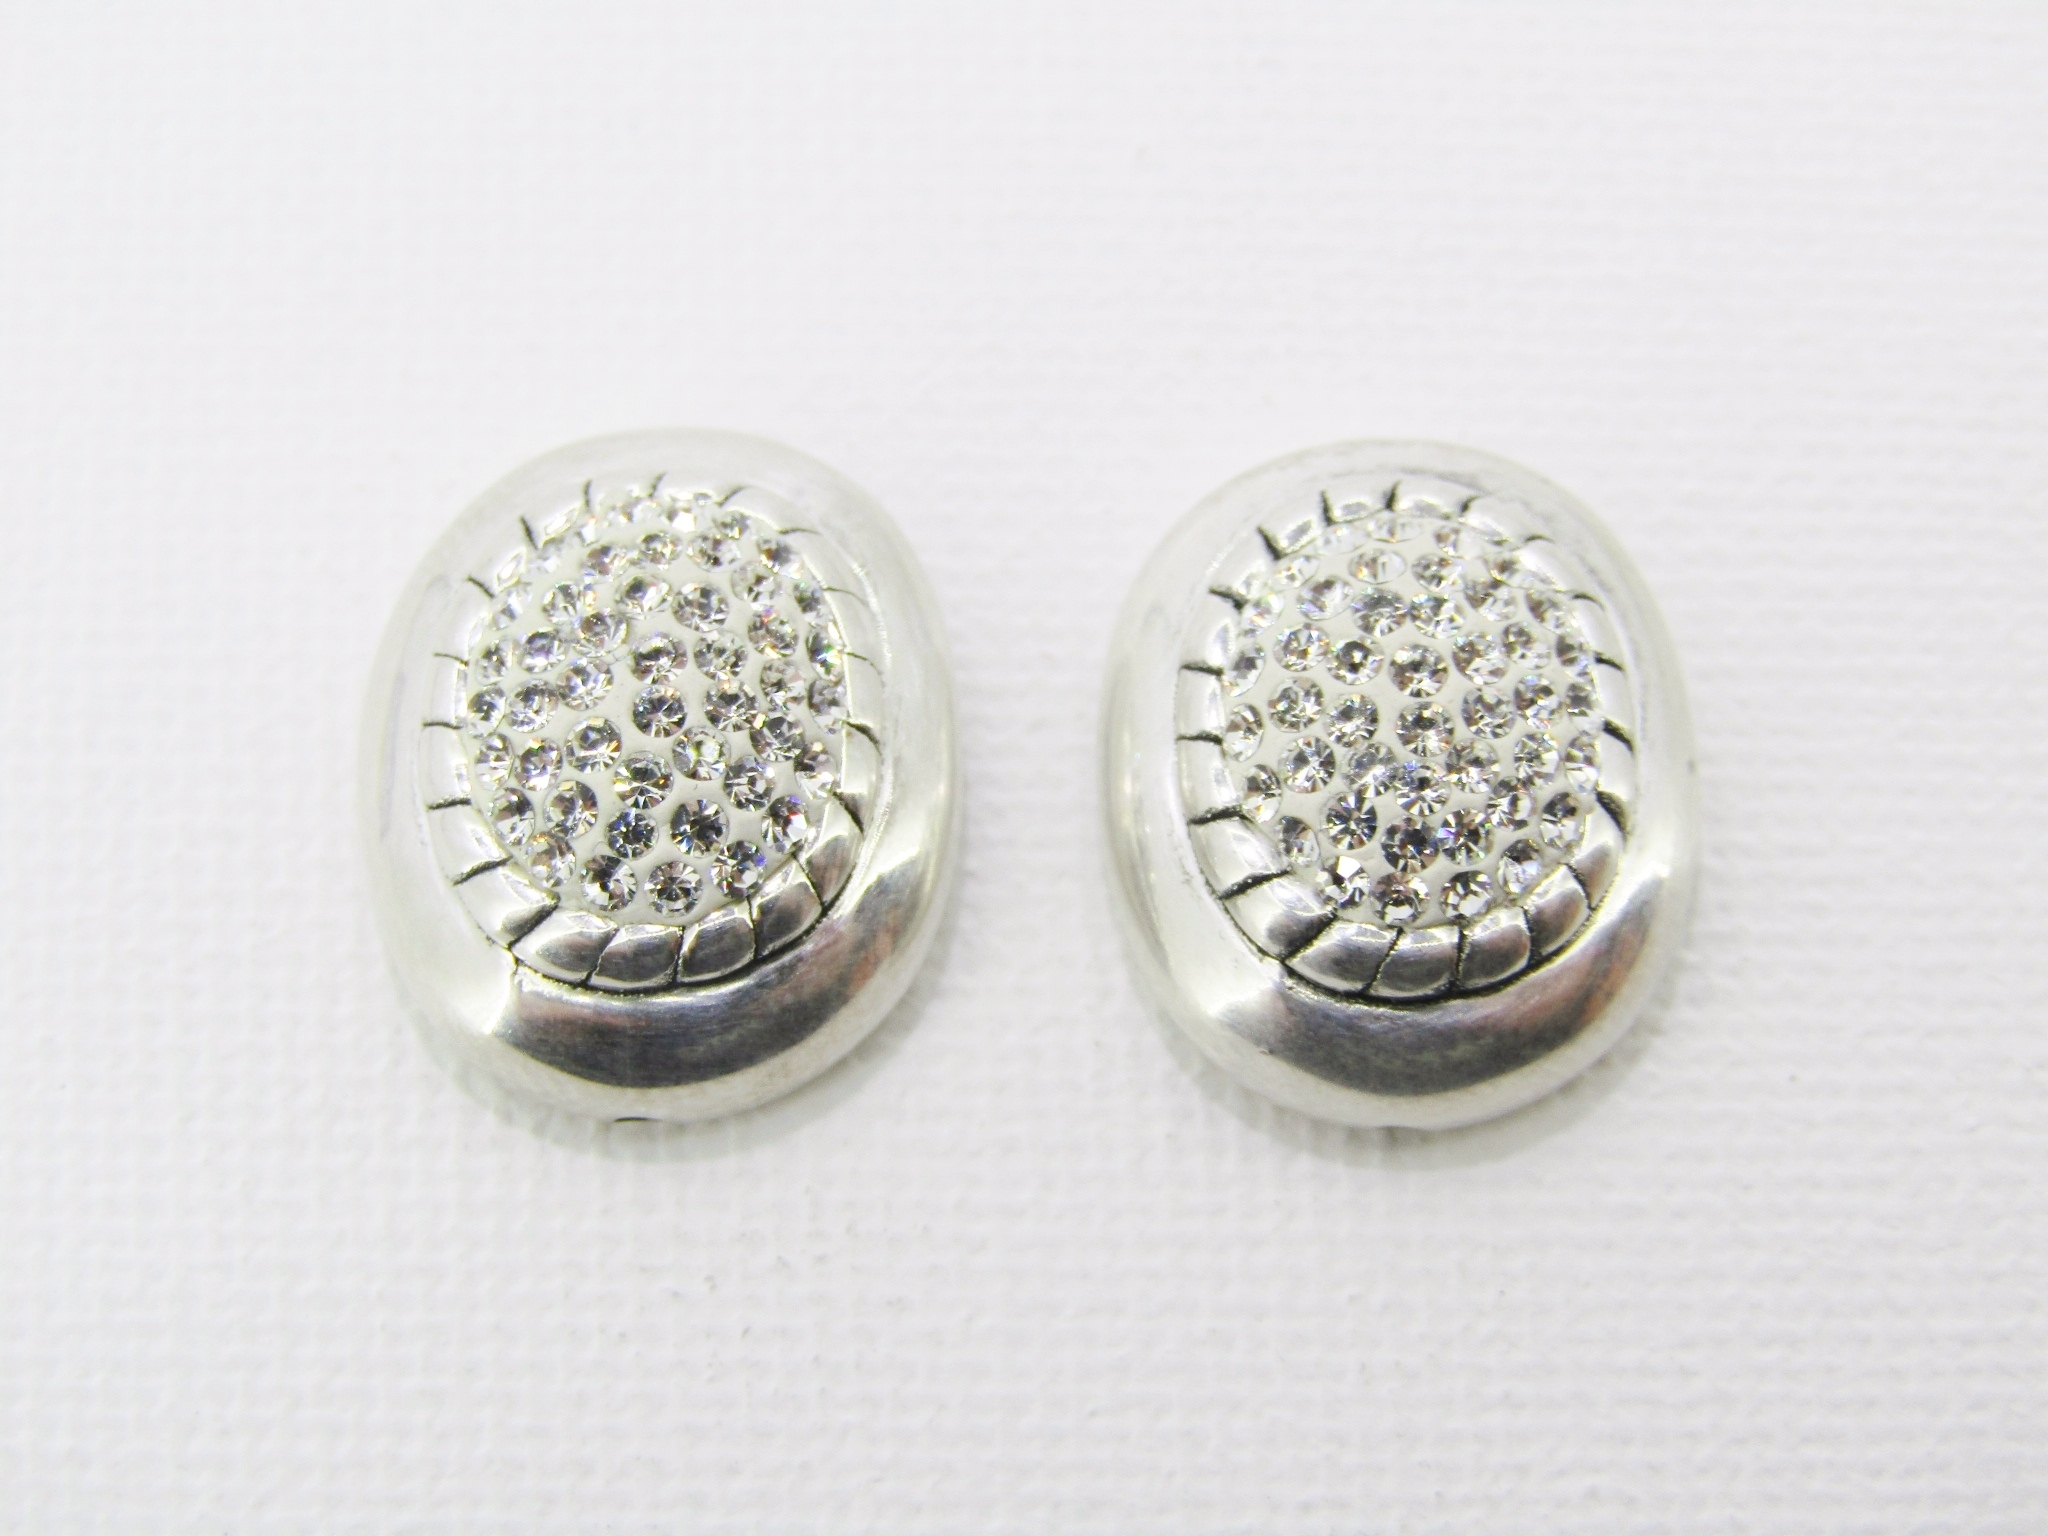 A Beautiful Pair of Oval Zirconia Earrings in Sterling Silver.